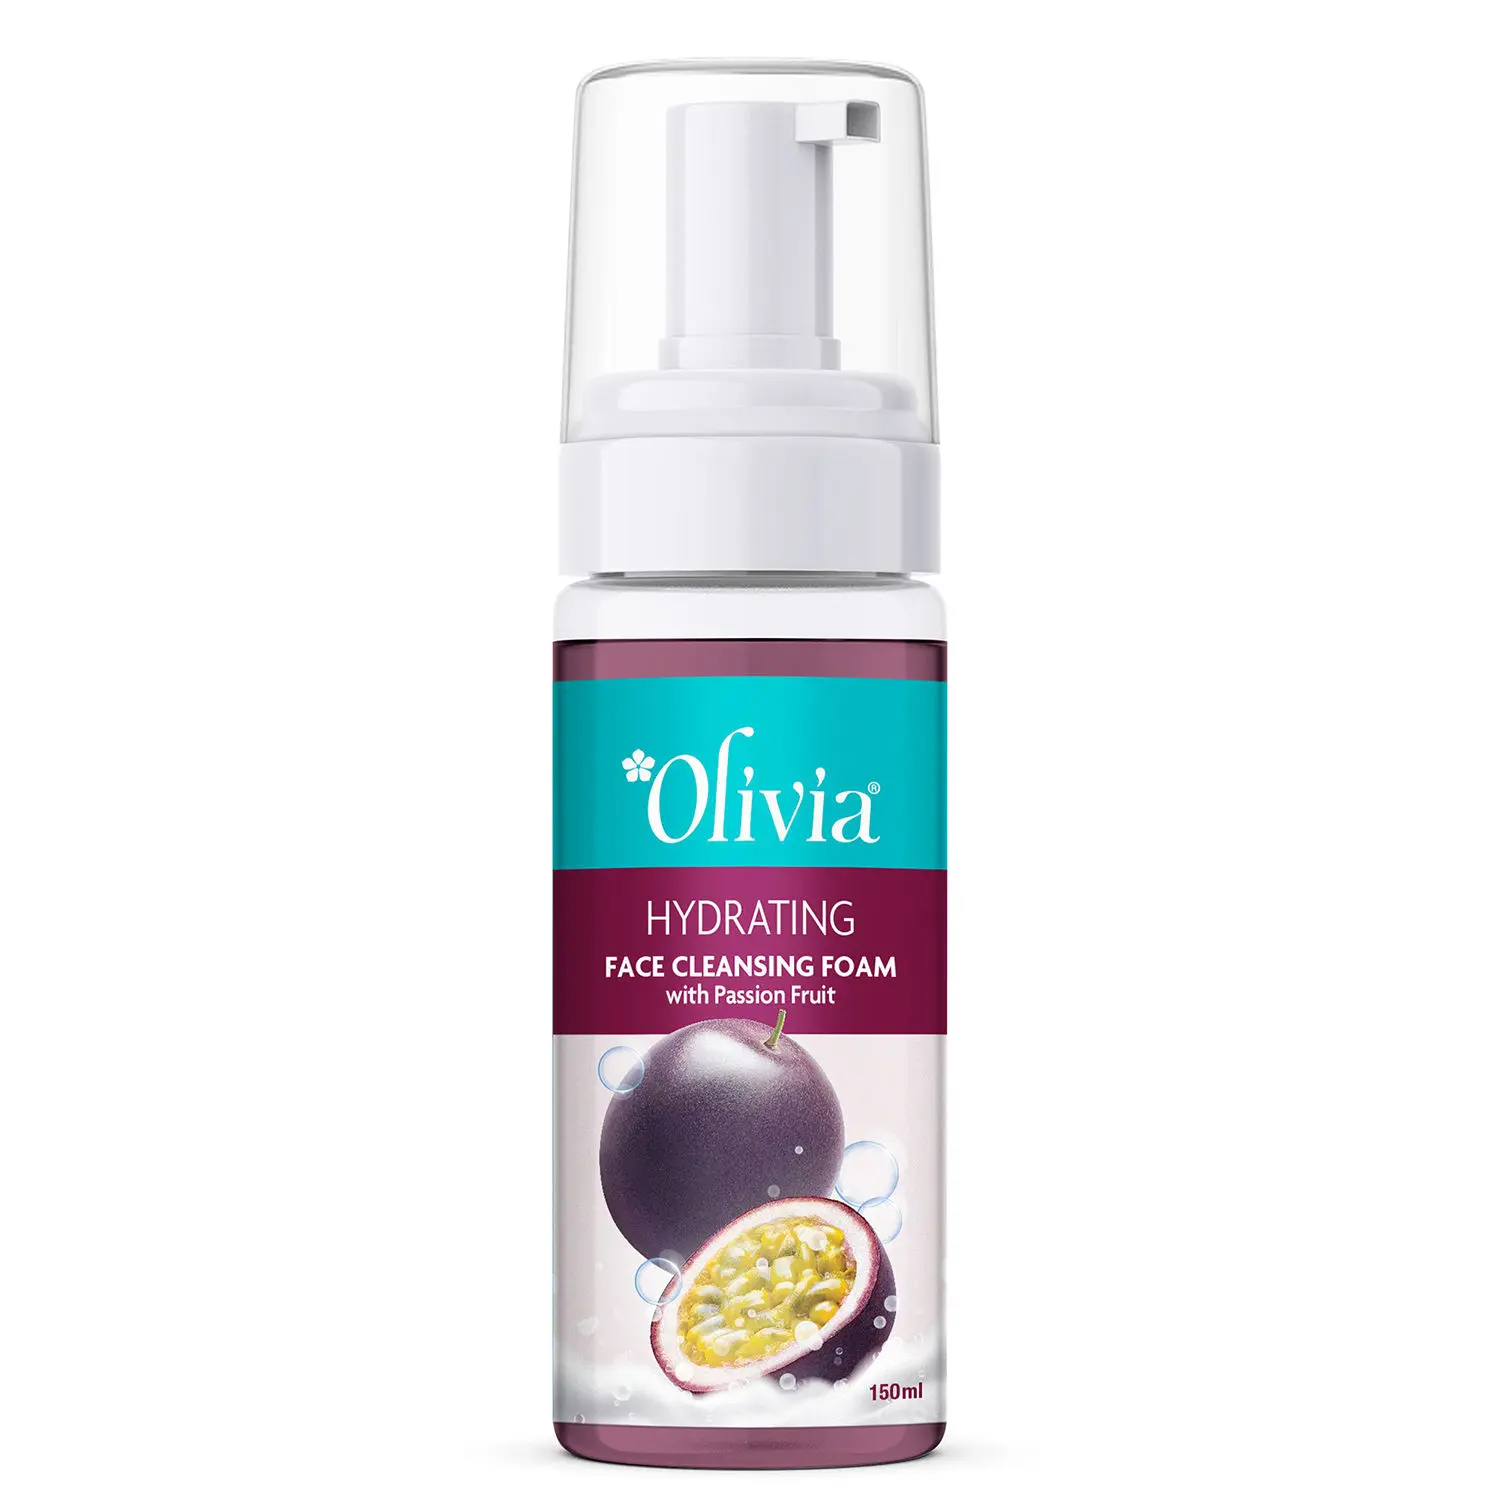 Olivia Clarifying Face Cleansing Foam with Passion Fruit - 150ml - Antioxidant Benefits, Reduces Skin Irritation, Hydrates & Rejuvenates Skin, Skin Glow